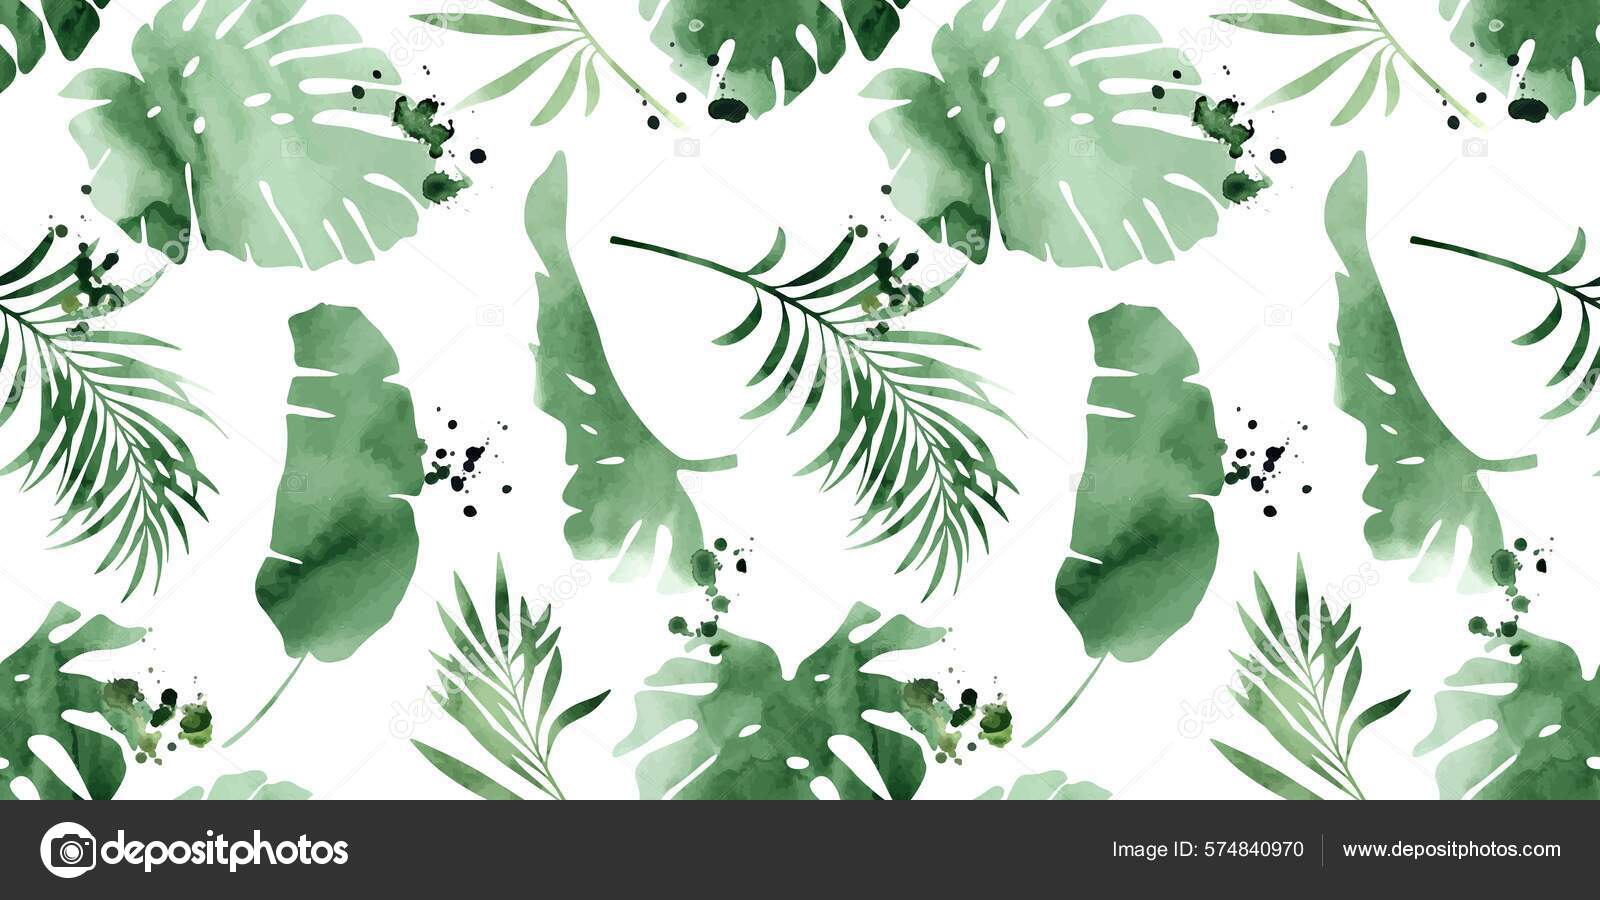 100+] Tropical Leaves Desktop Wallpapers | Wallpapers.com